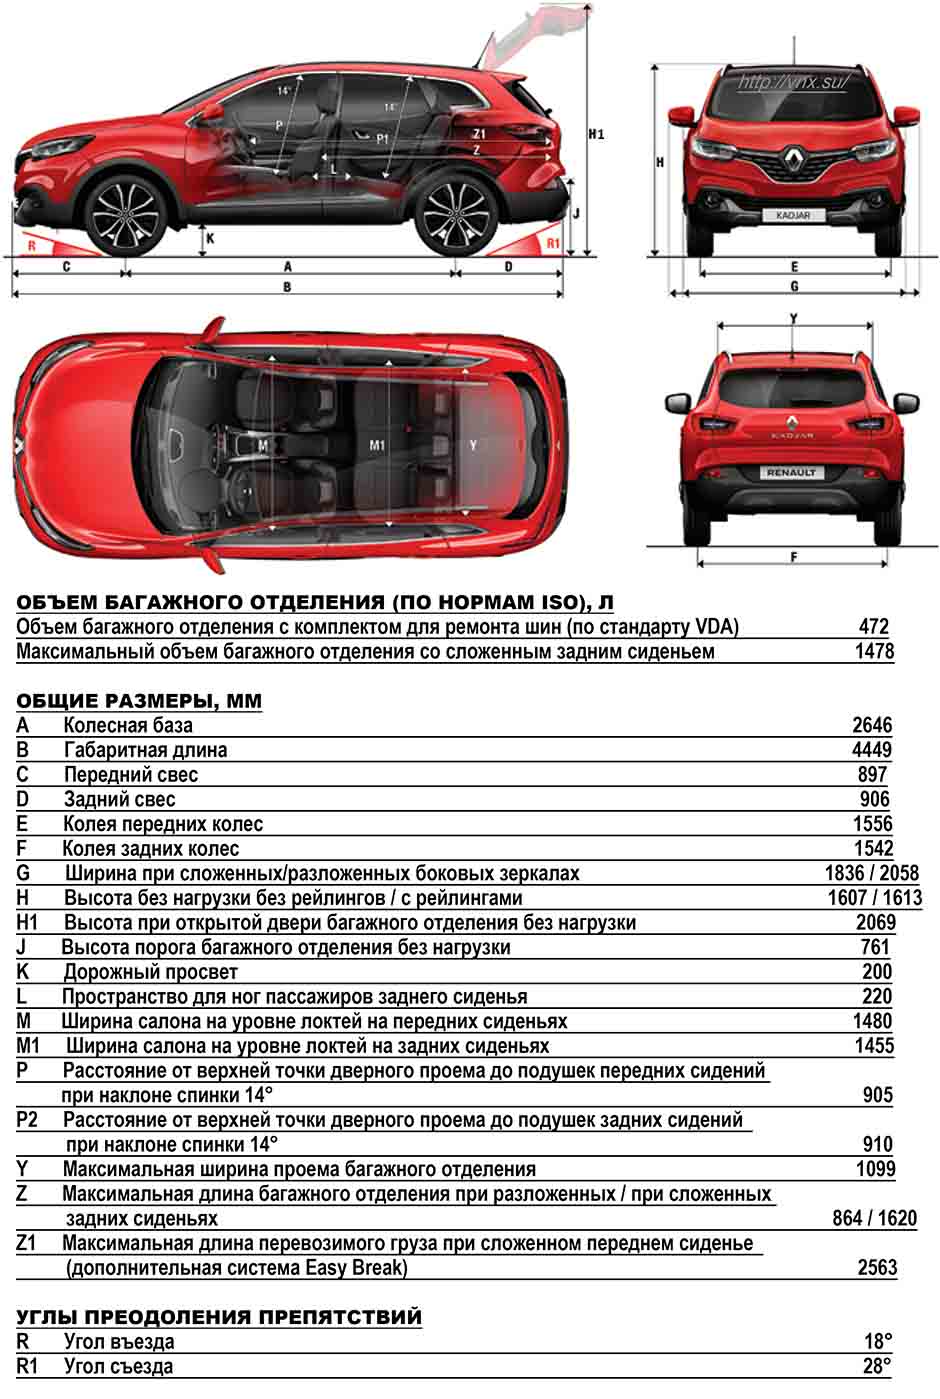 Габаритные размеры Рено Каджар 2015 (dimensions Renault Kadjar)